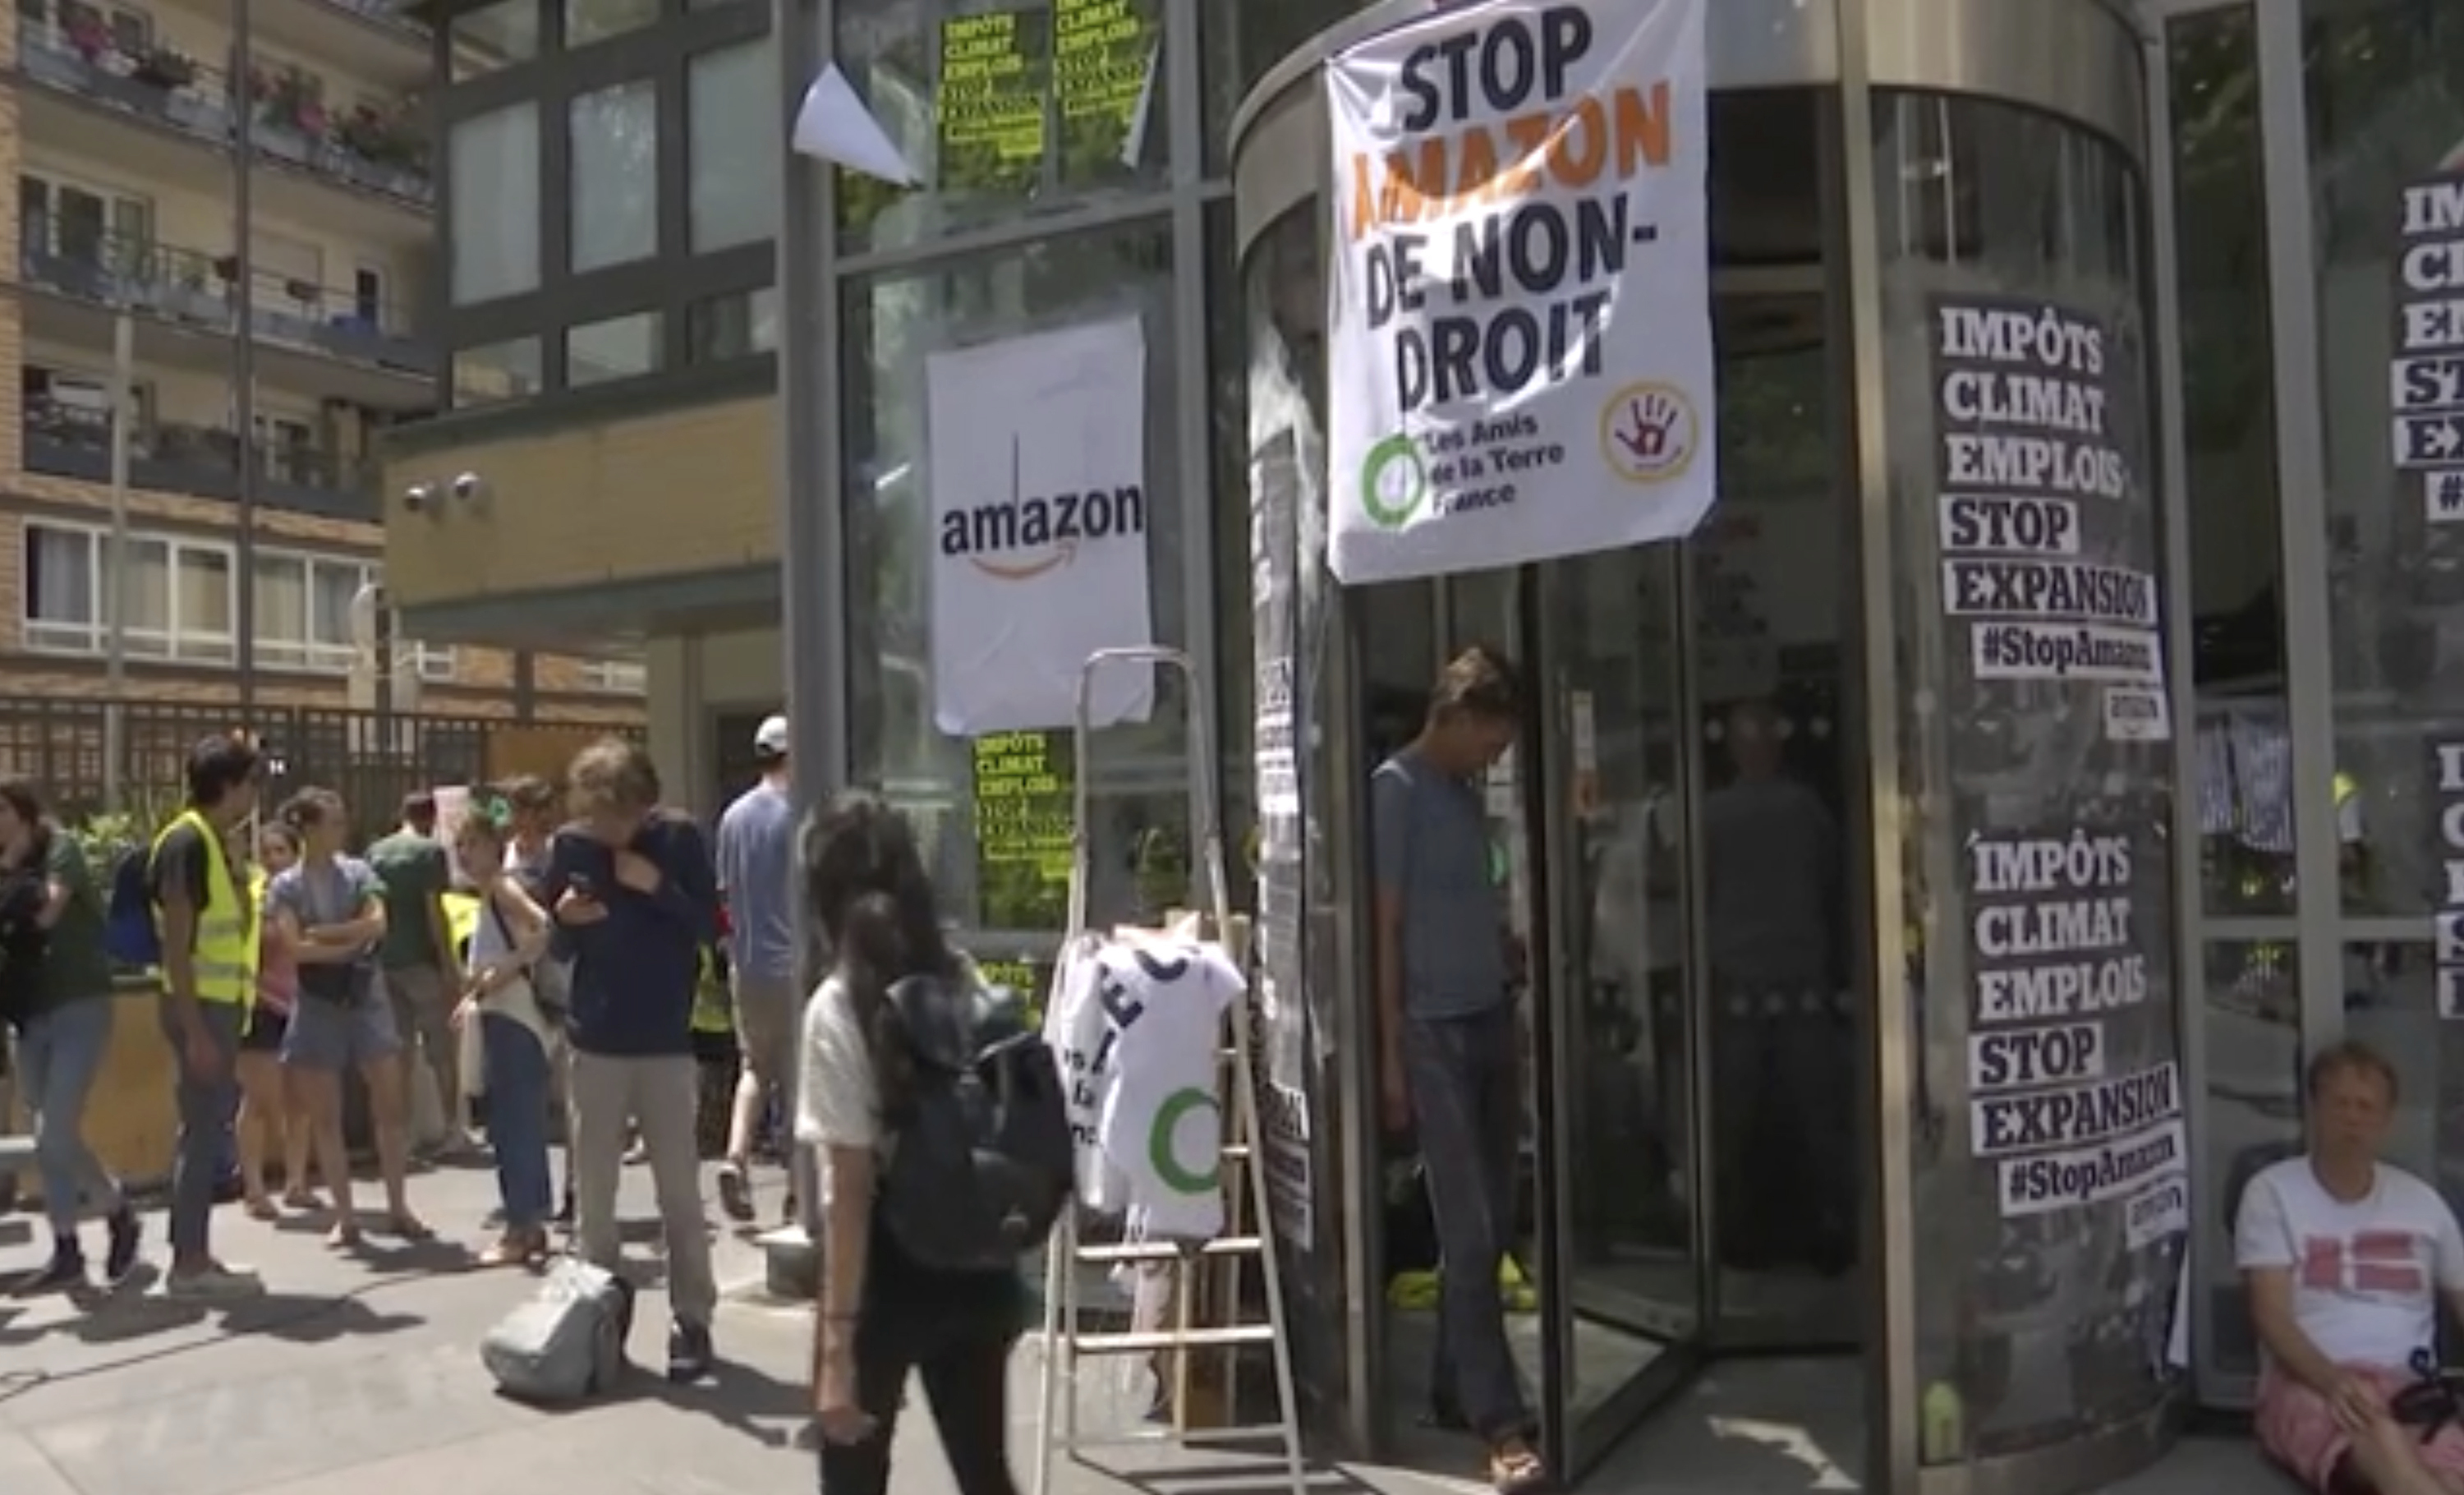 Environmental activists at the Amazon HQ in Paris